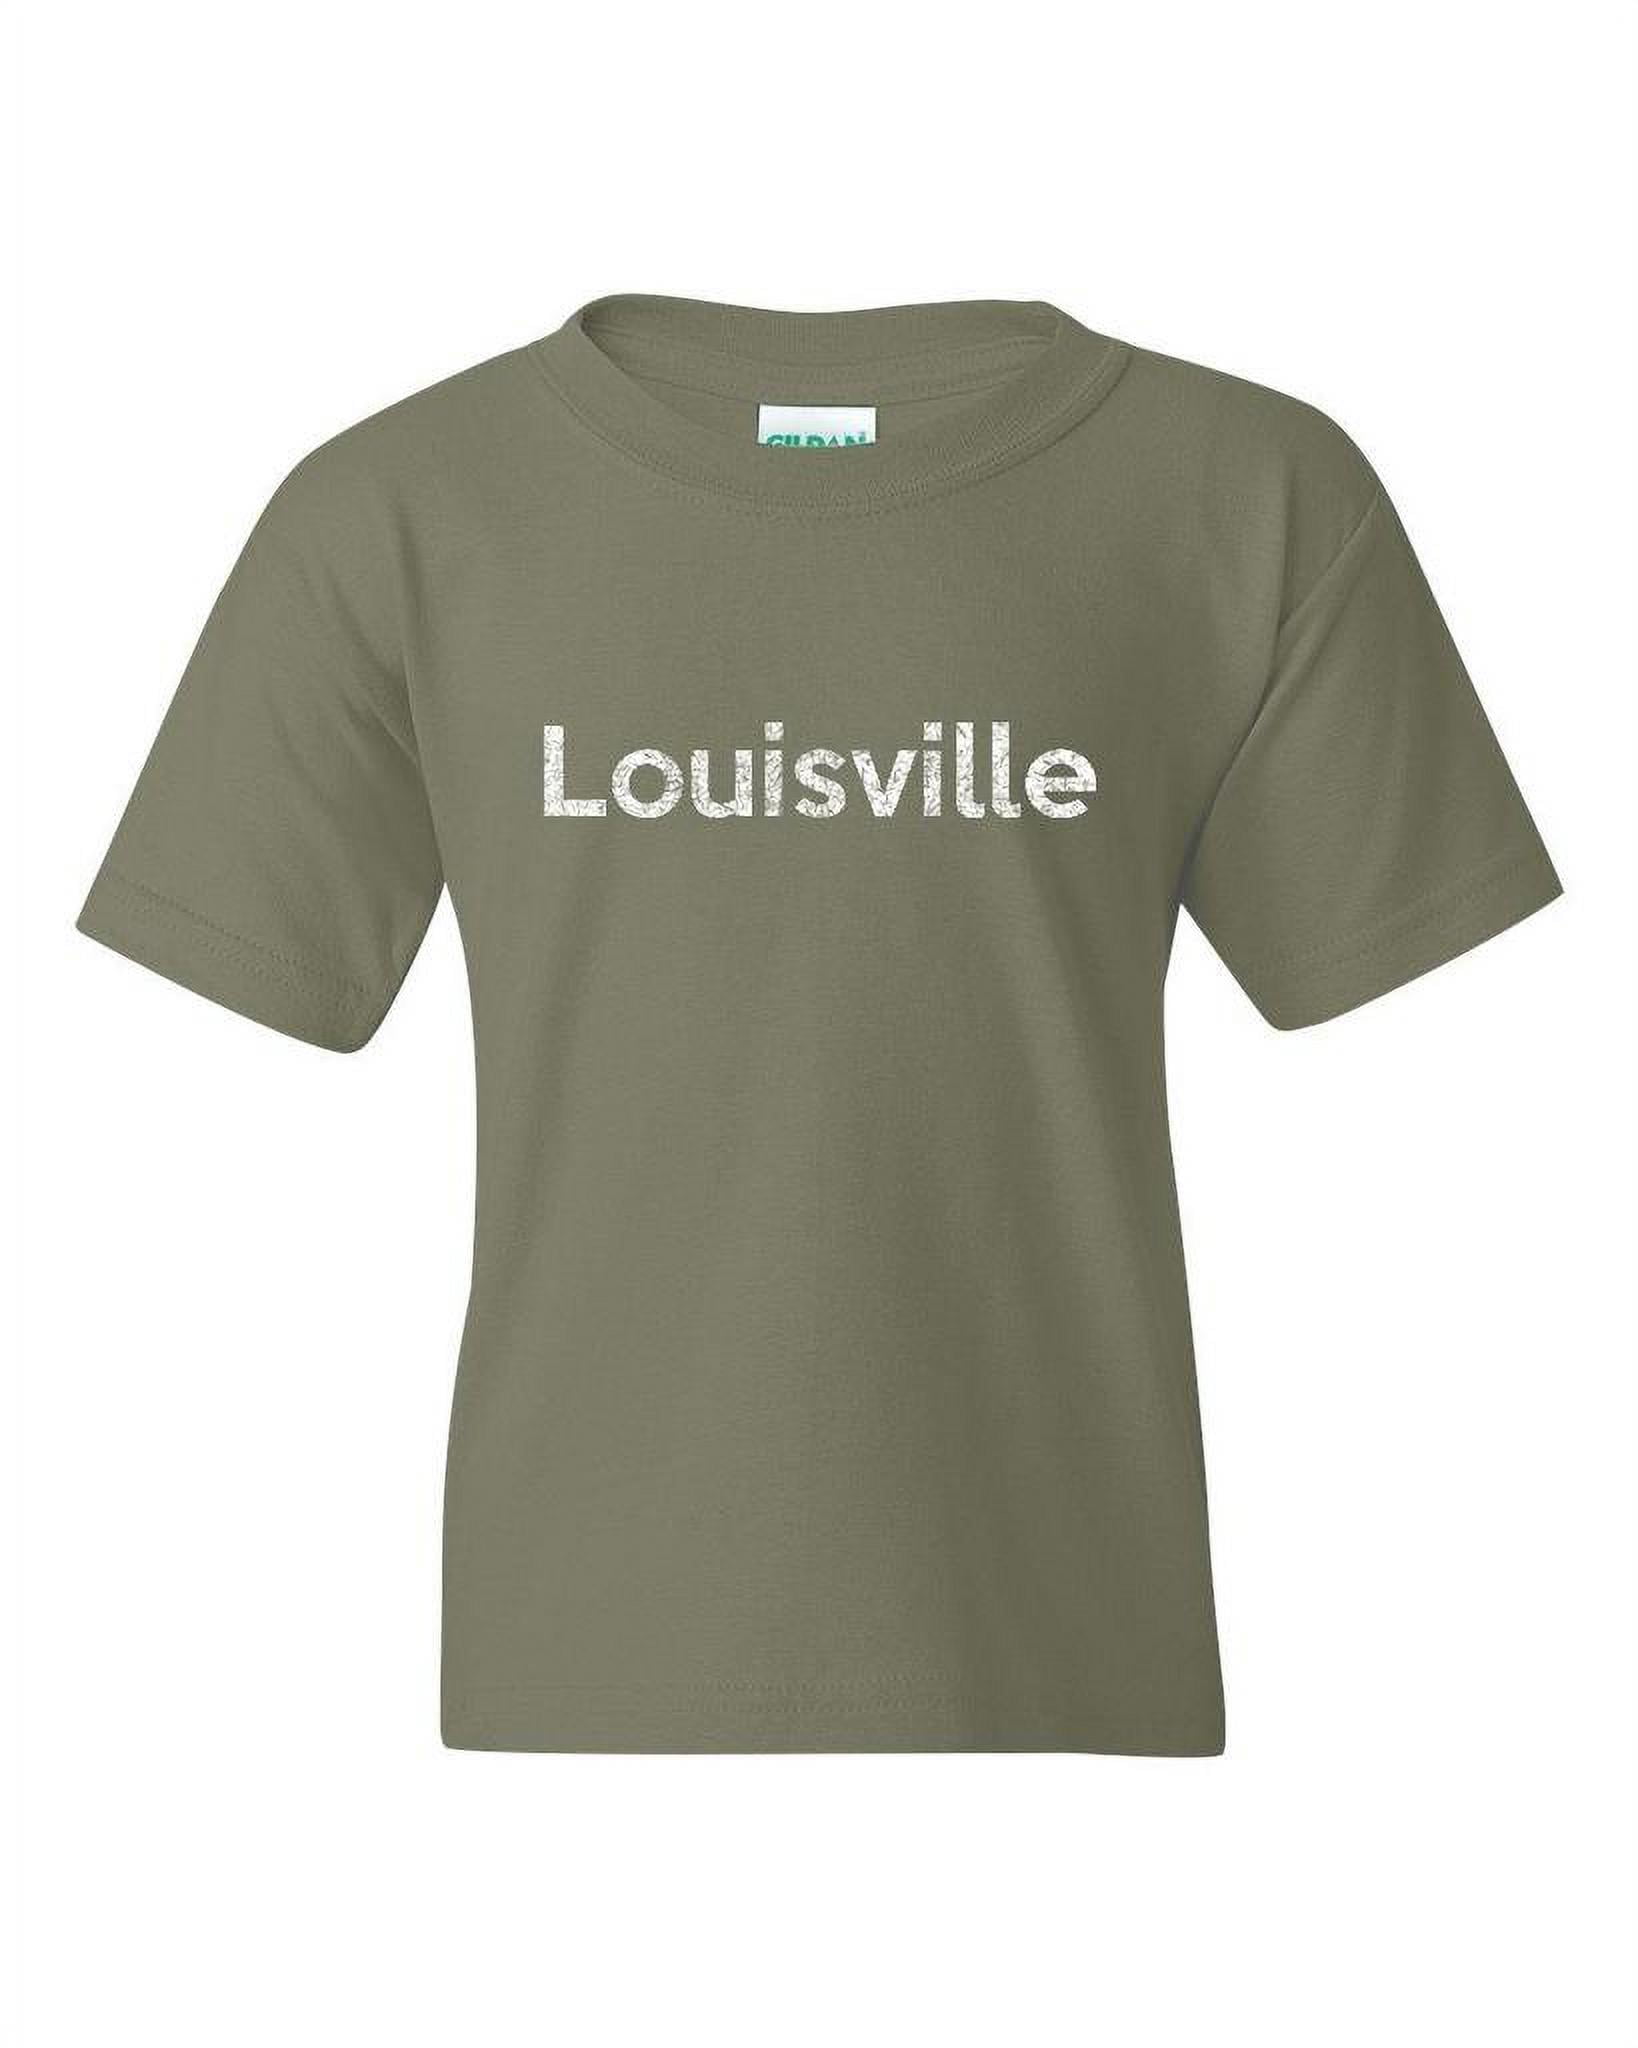 Artix Louisville Unisex Youth Kids T-Shirt Tee Clothing Youth X-Large Military Green, Kids Unisex, Size: XL